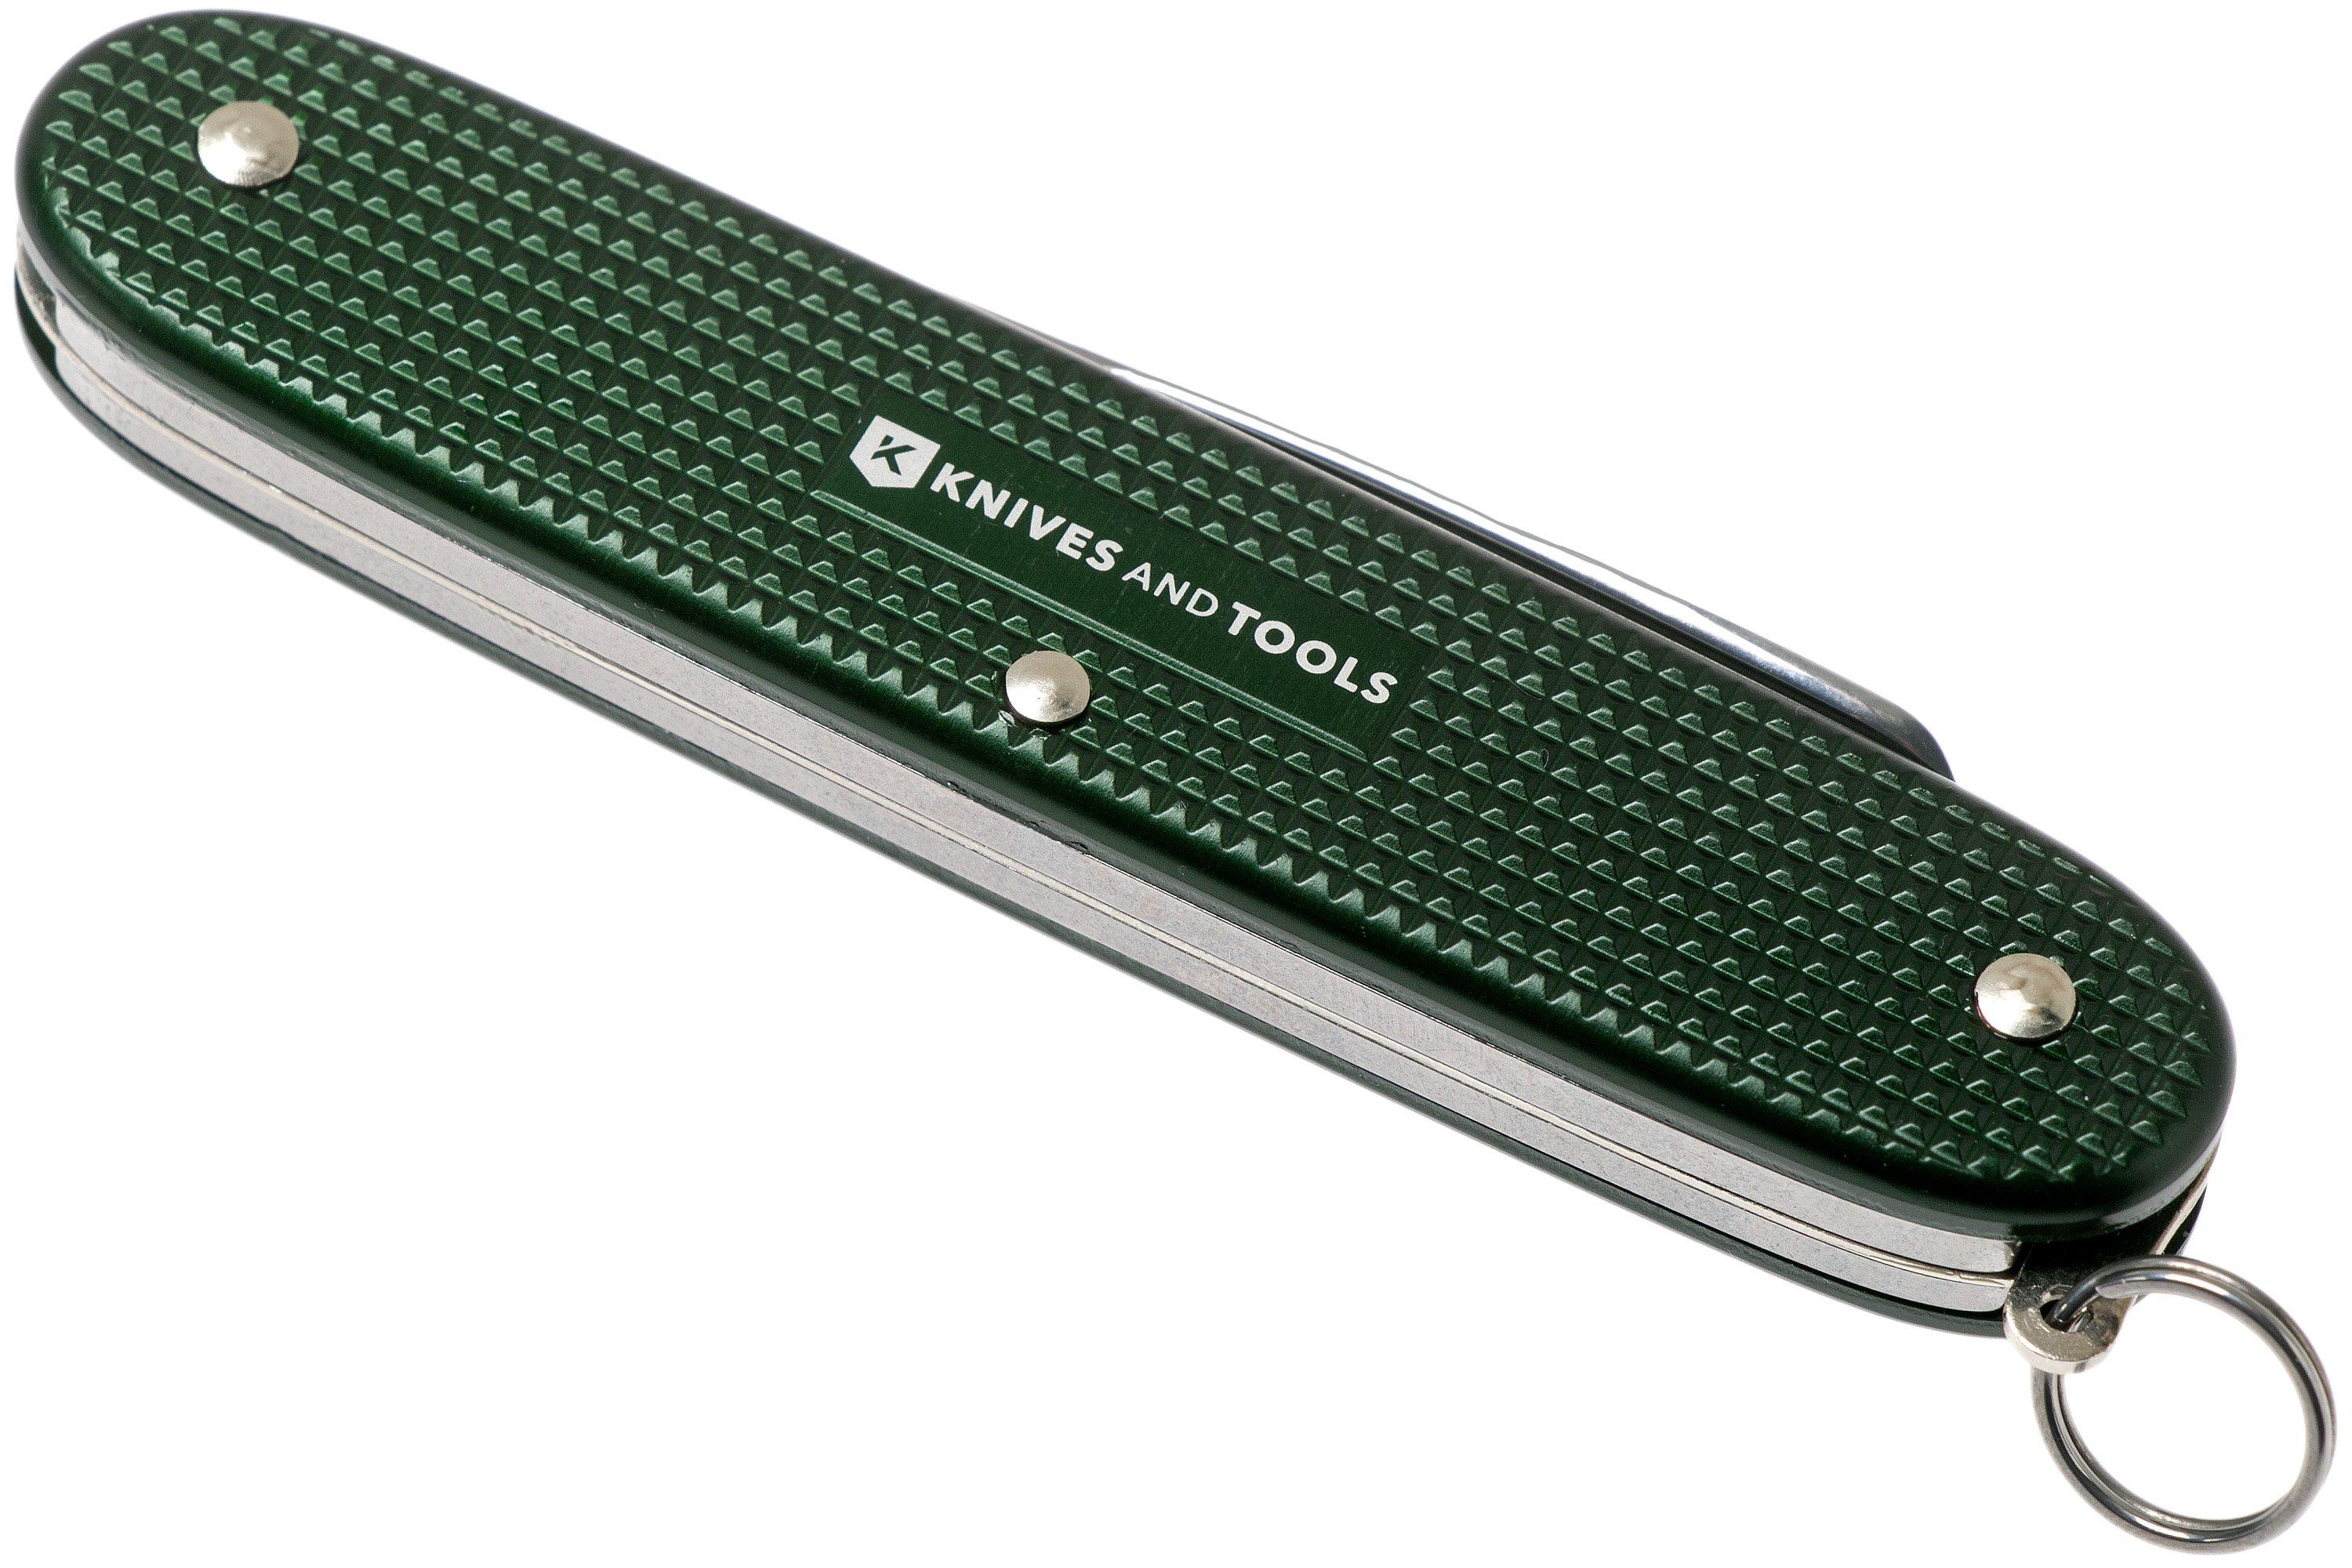 Victorinox Pioneer Alox Green 0.8201.24R4.KTE1 Knivesandtools Edition,  Swiss pocket knife